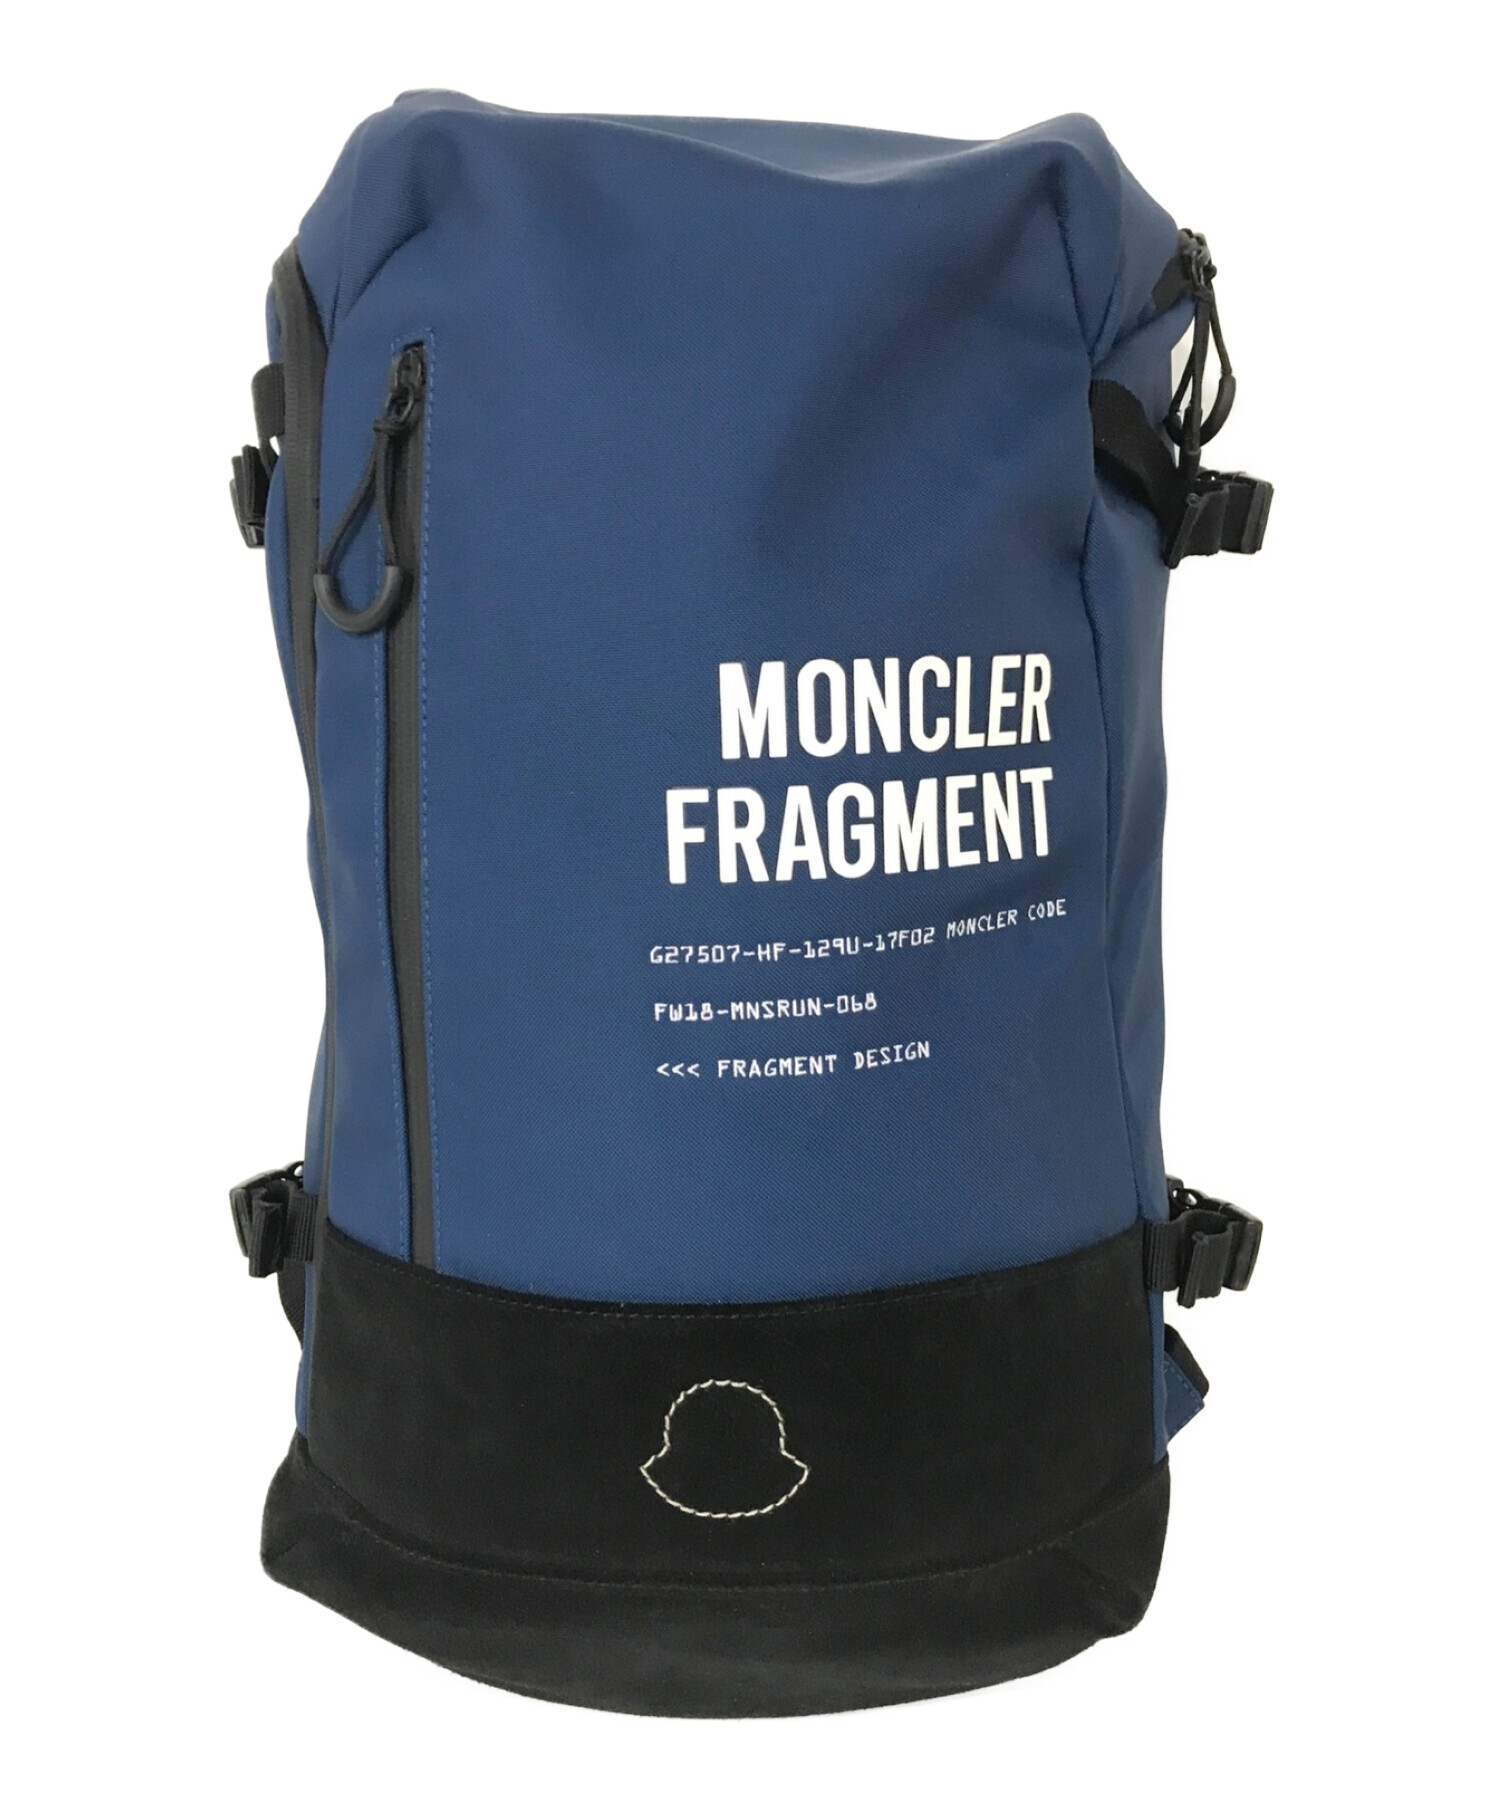 MONCLER (モンクレール) FRAGMENT (フラグメント) バックパック ネイビー